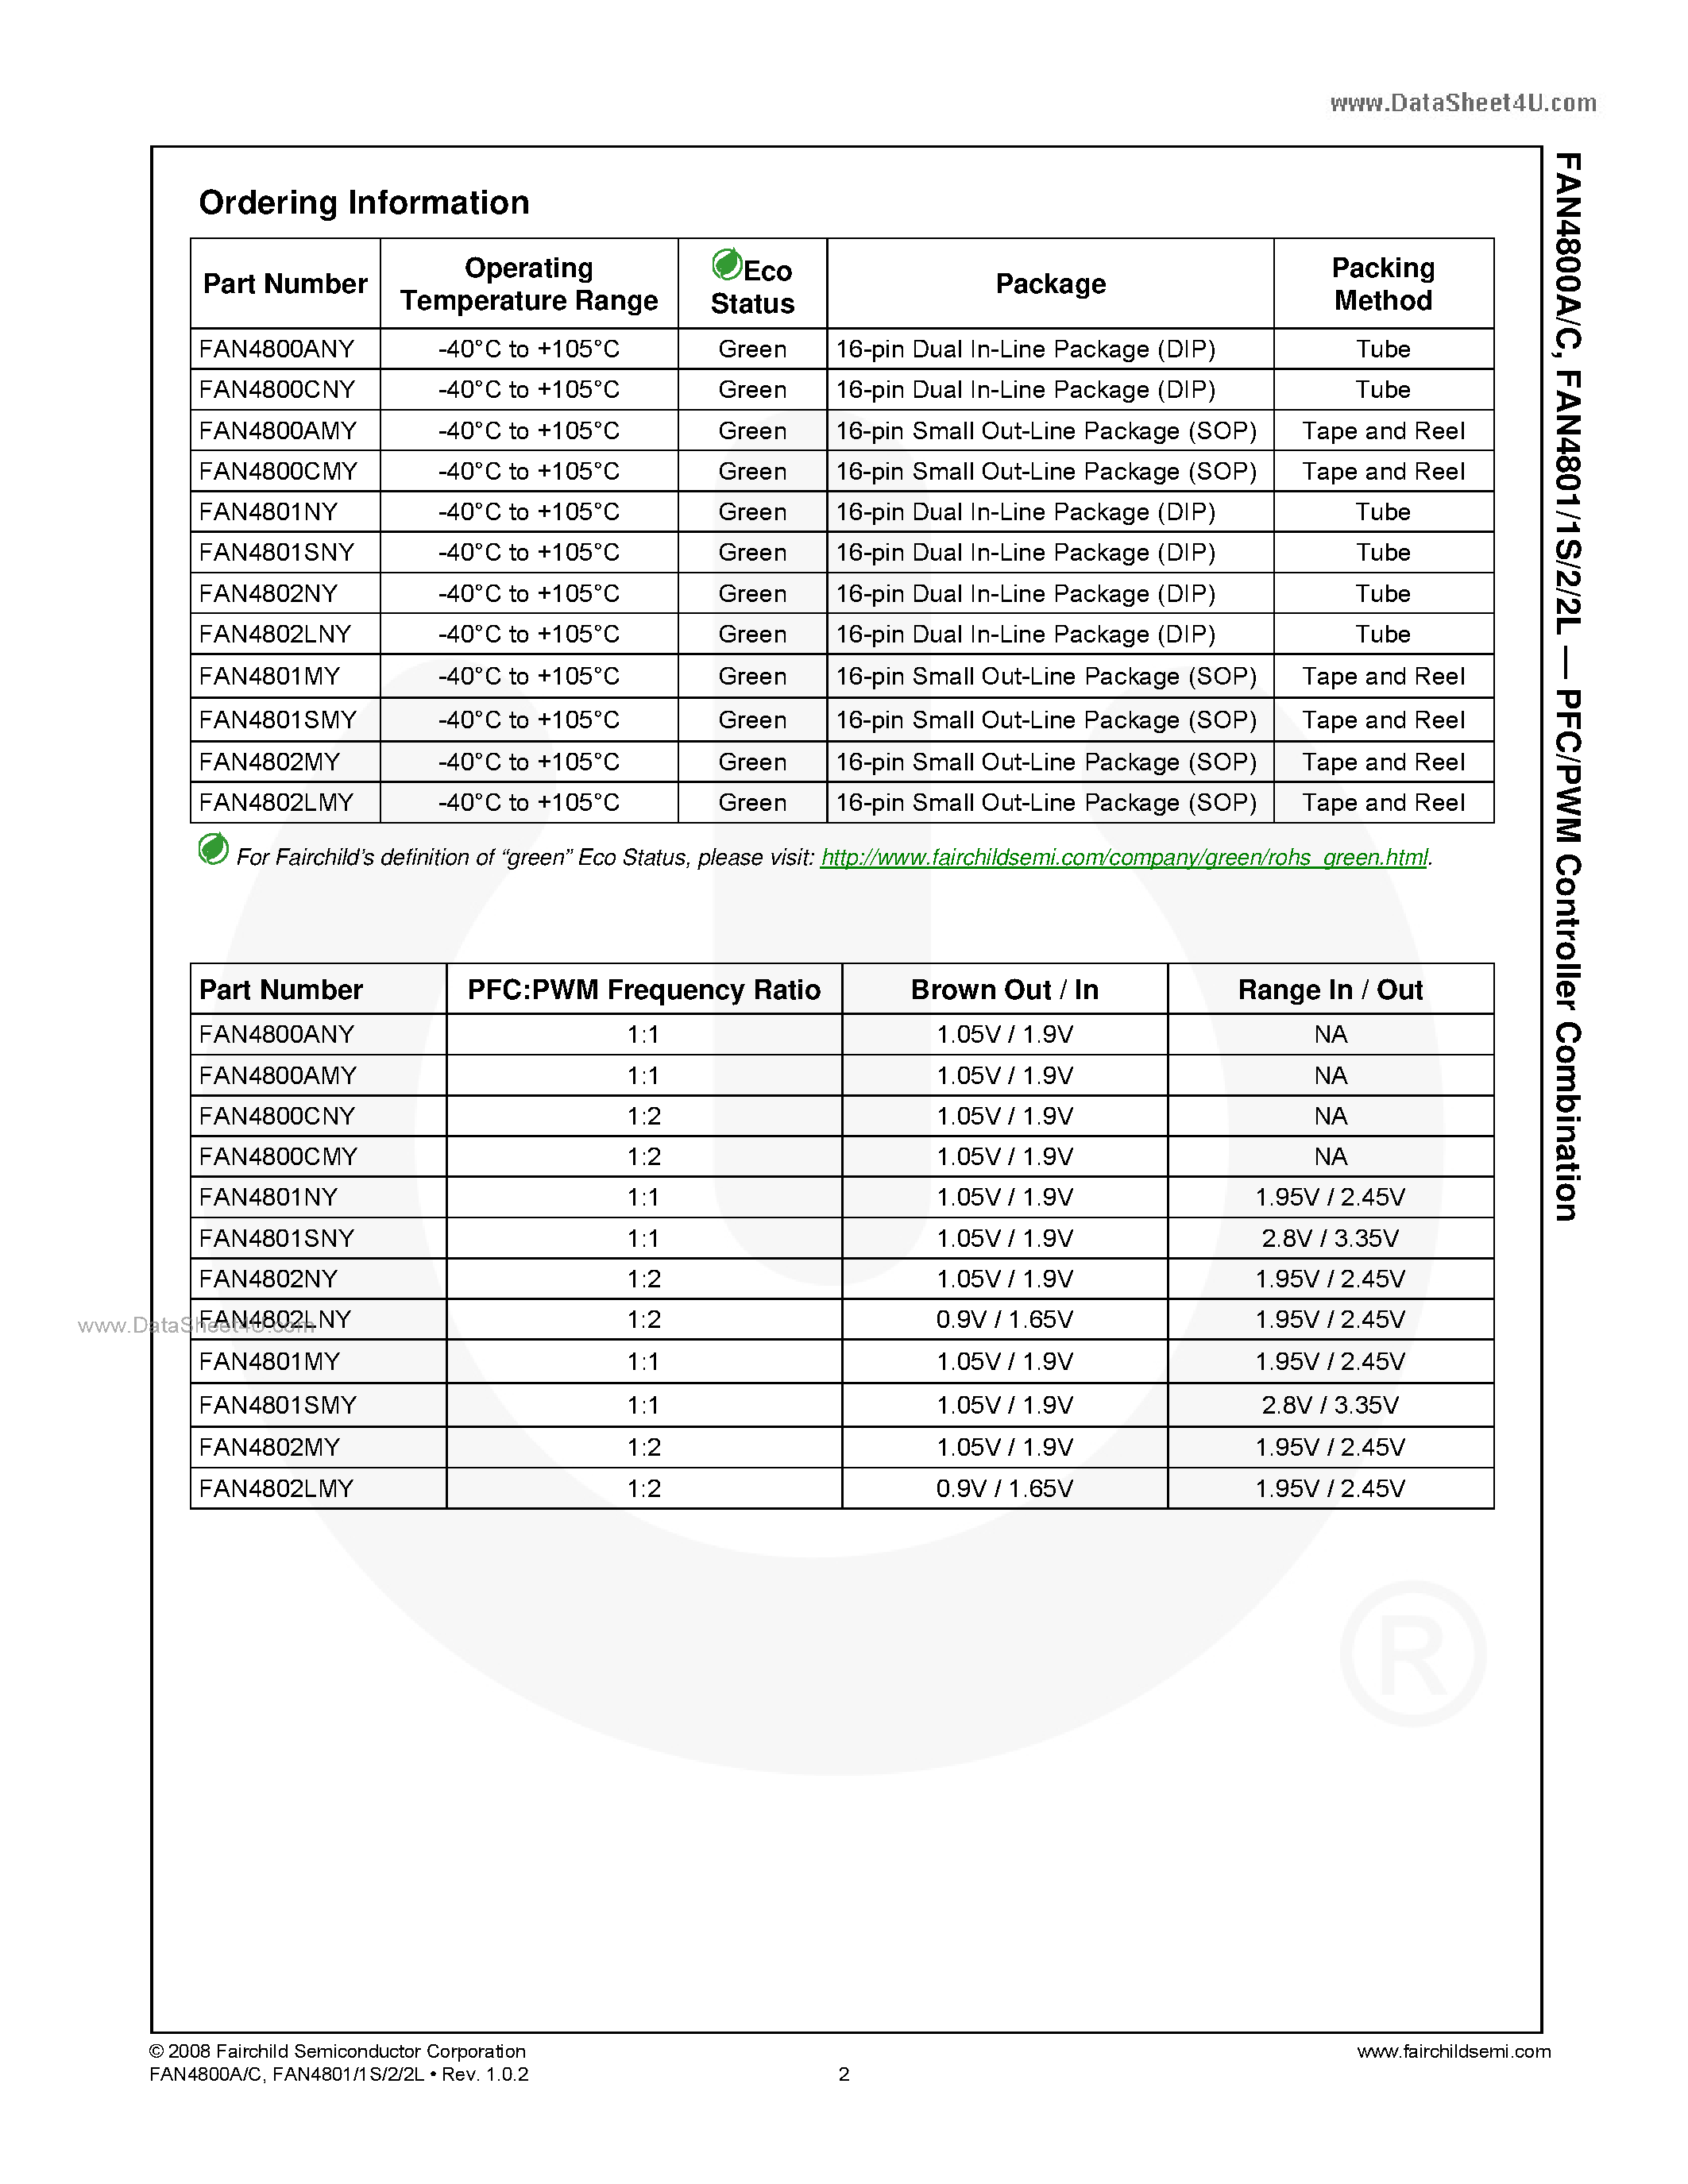 Datasheet FAN4800A - (FAN4800x / FAN480xx) PFC/PWM Controller Combination page 2